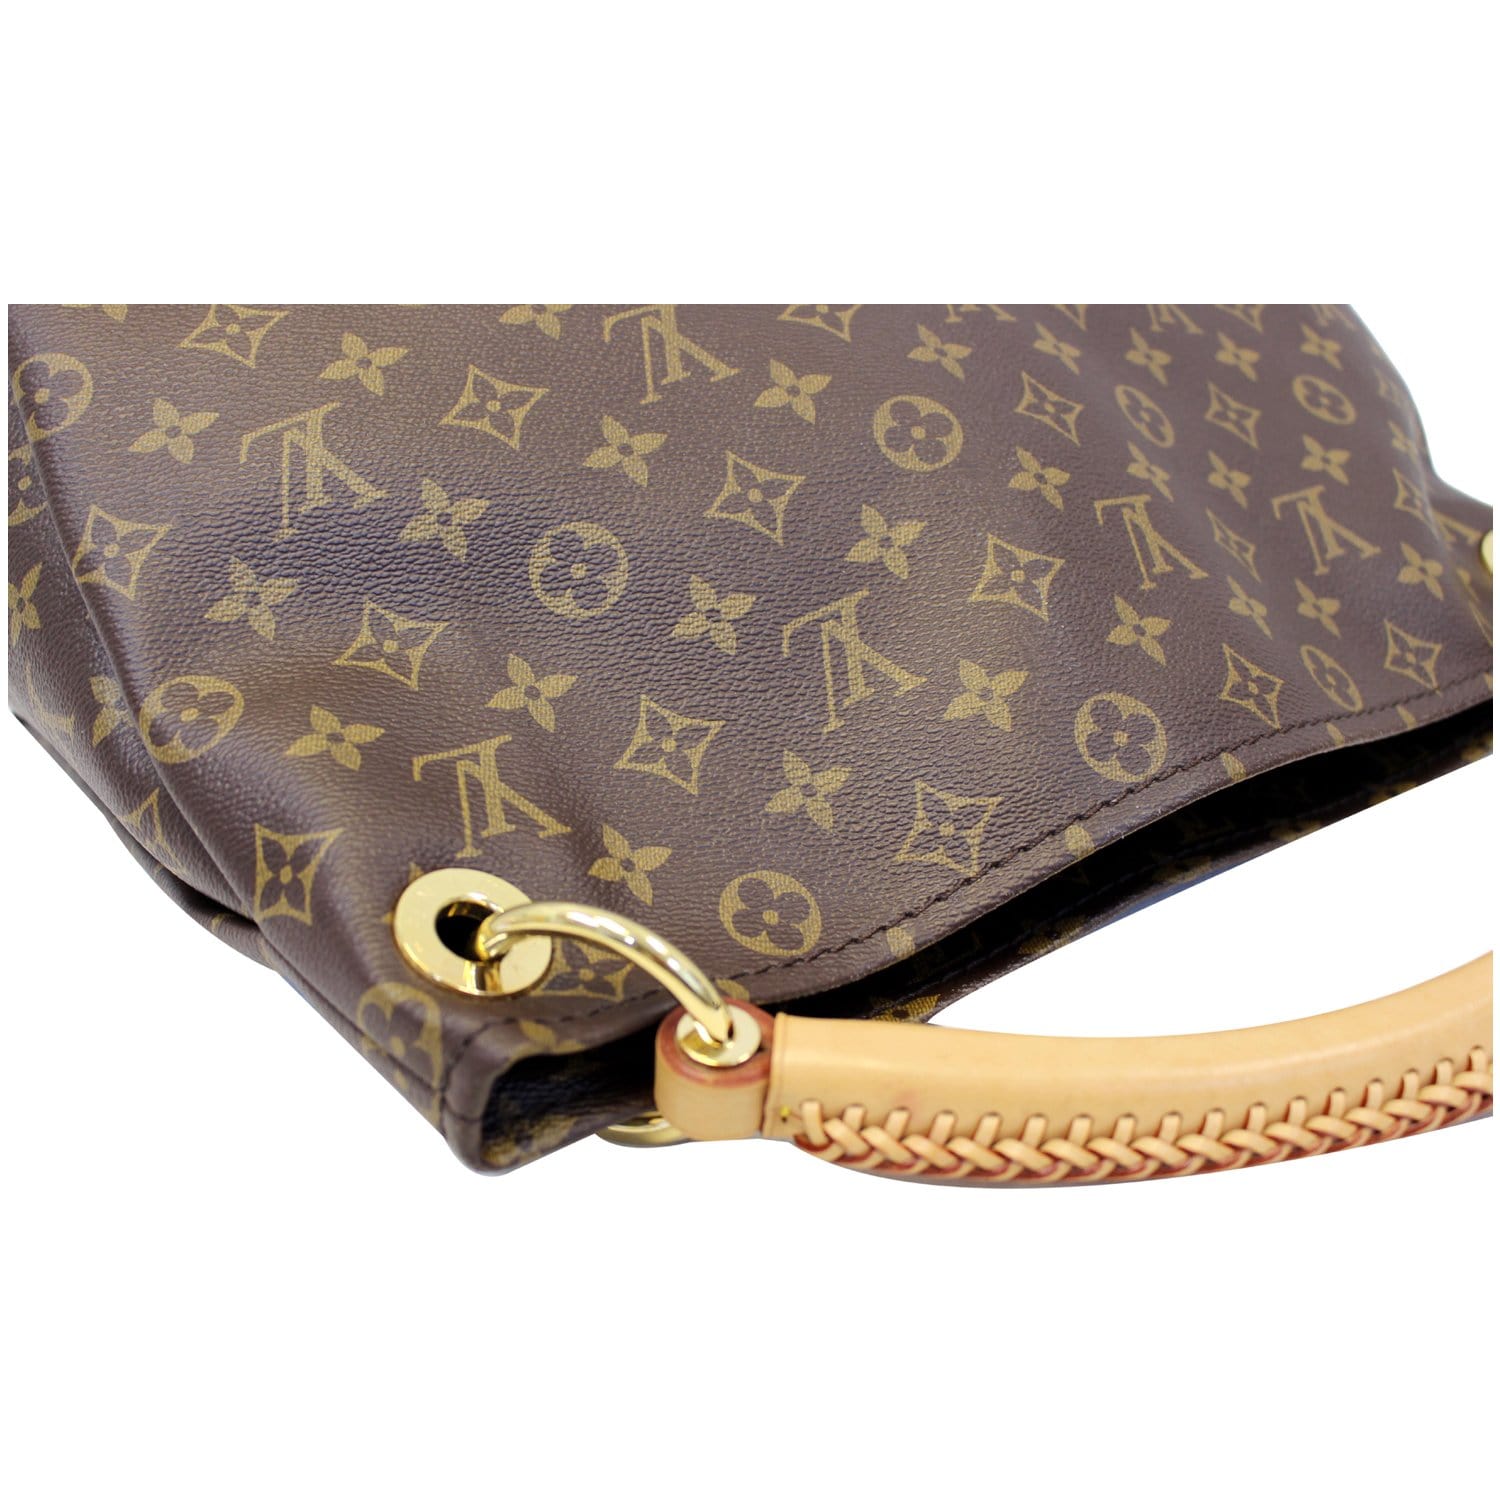 PRELOVED Louis Vuitton Artsy MM Monogram Tote Bag AR2170 092623